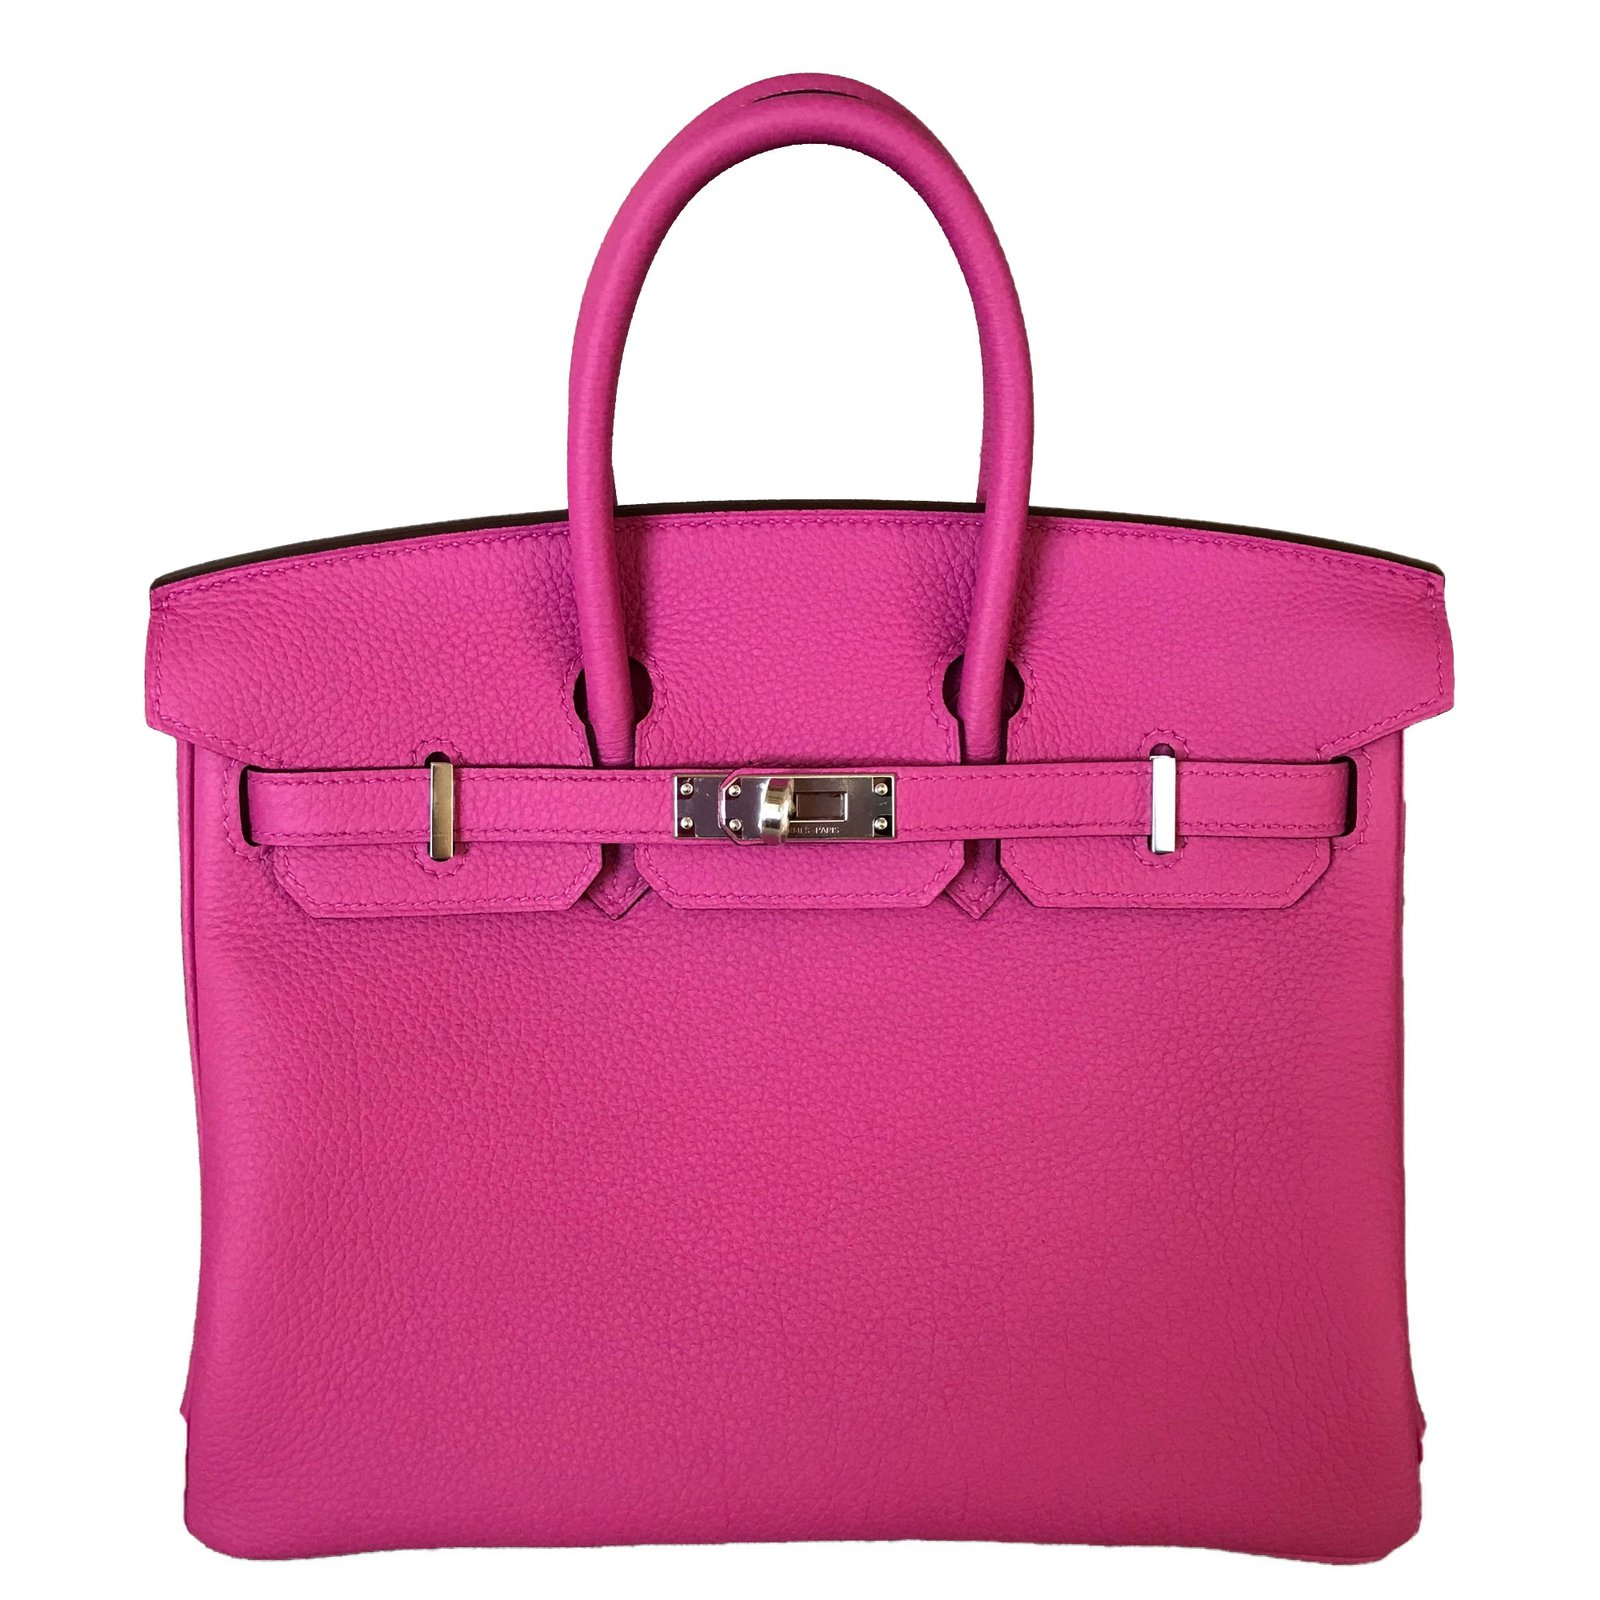 Hermès Hermes Birkin 25CM Magnolia Togo Leather with Palladium Hardware Handbags Leather Pink ...